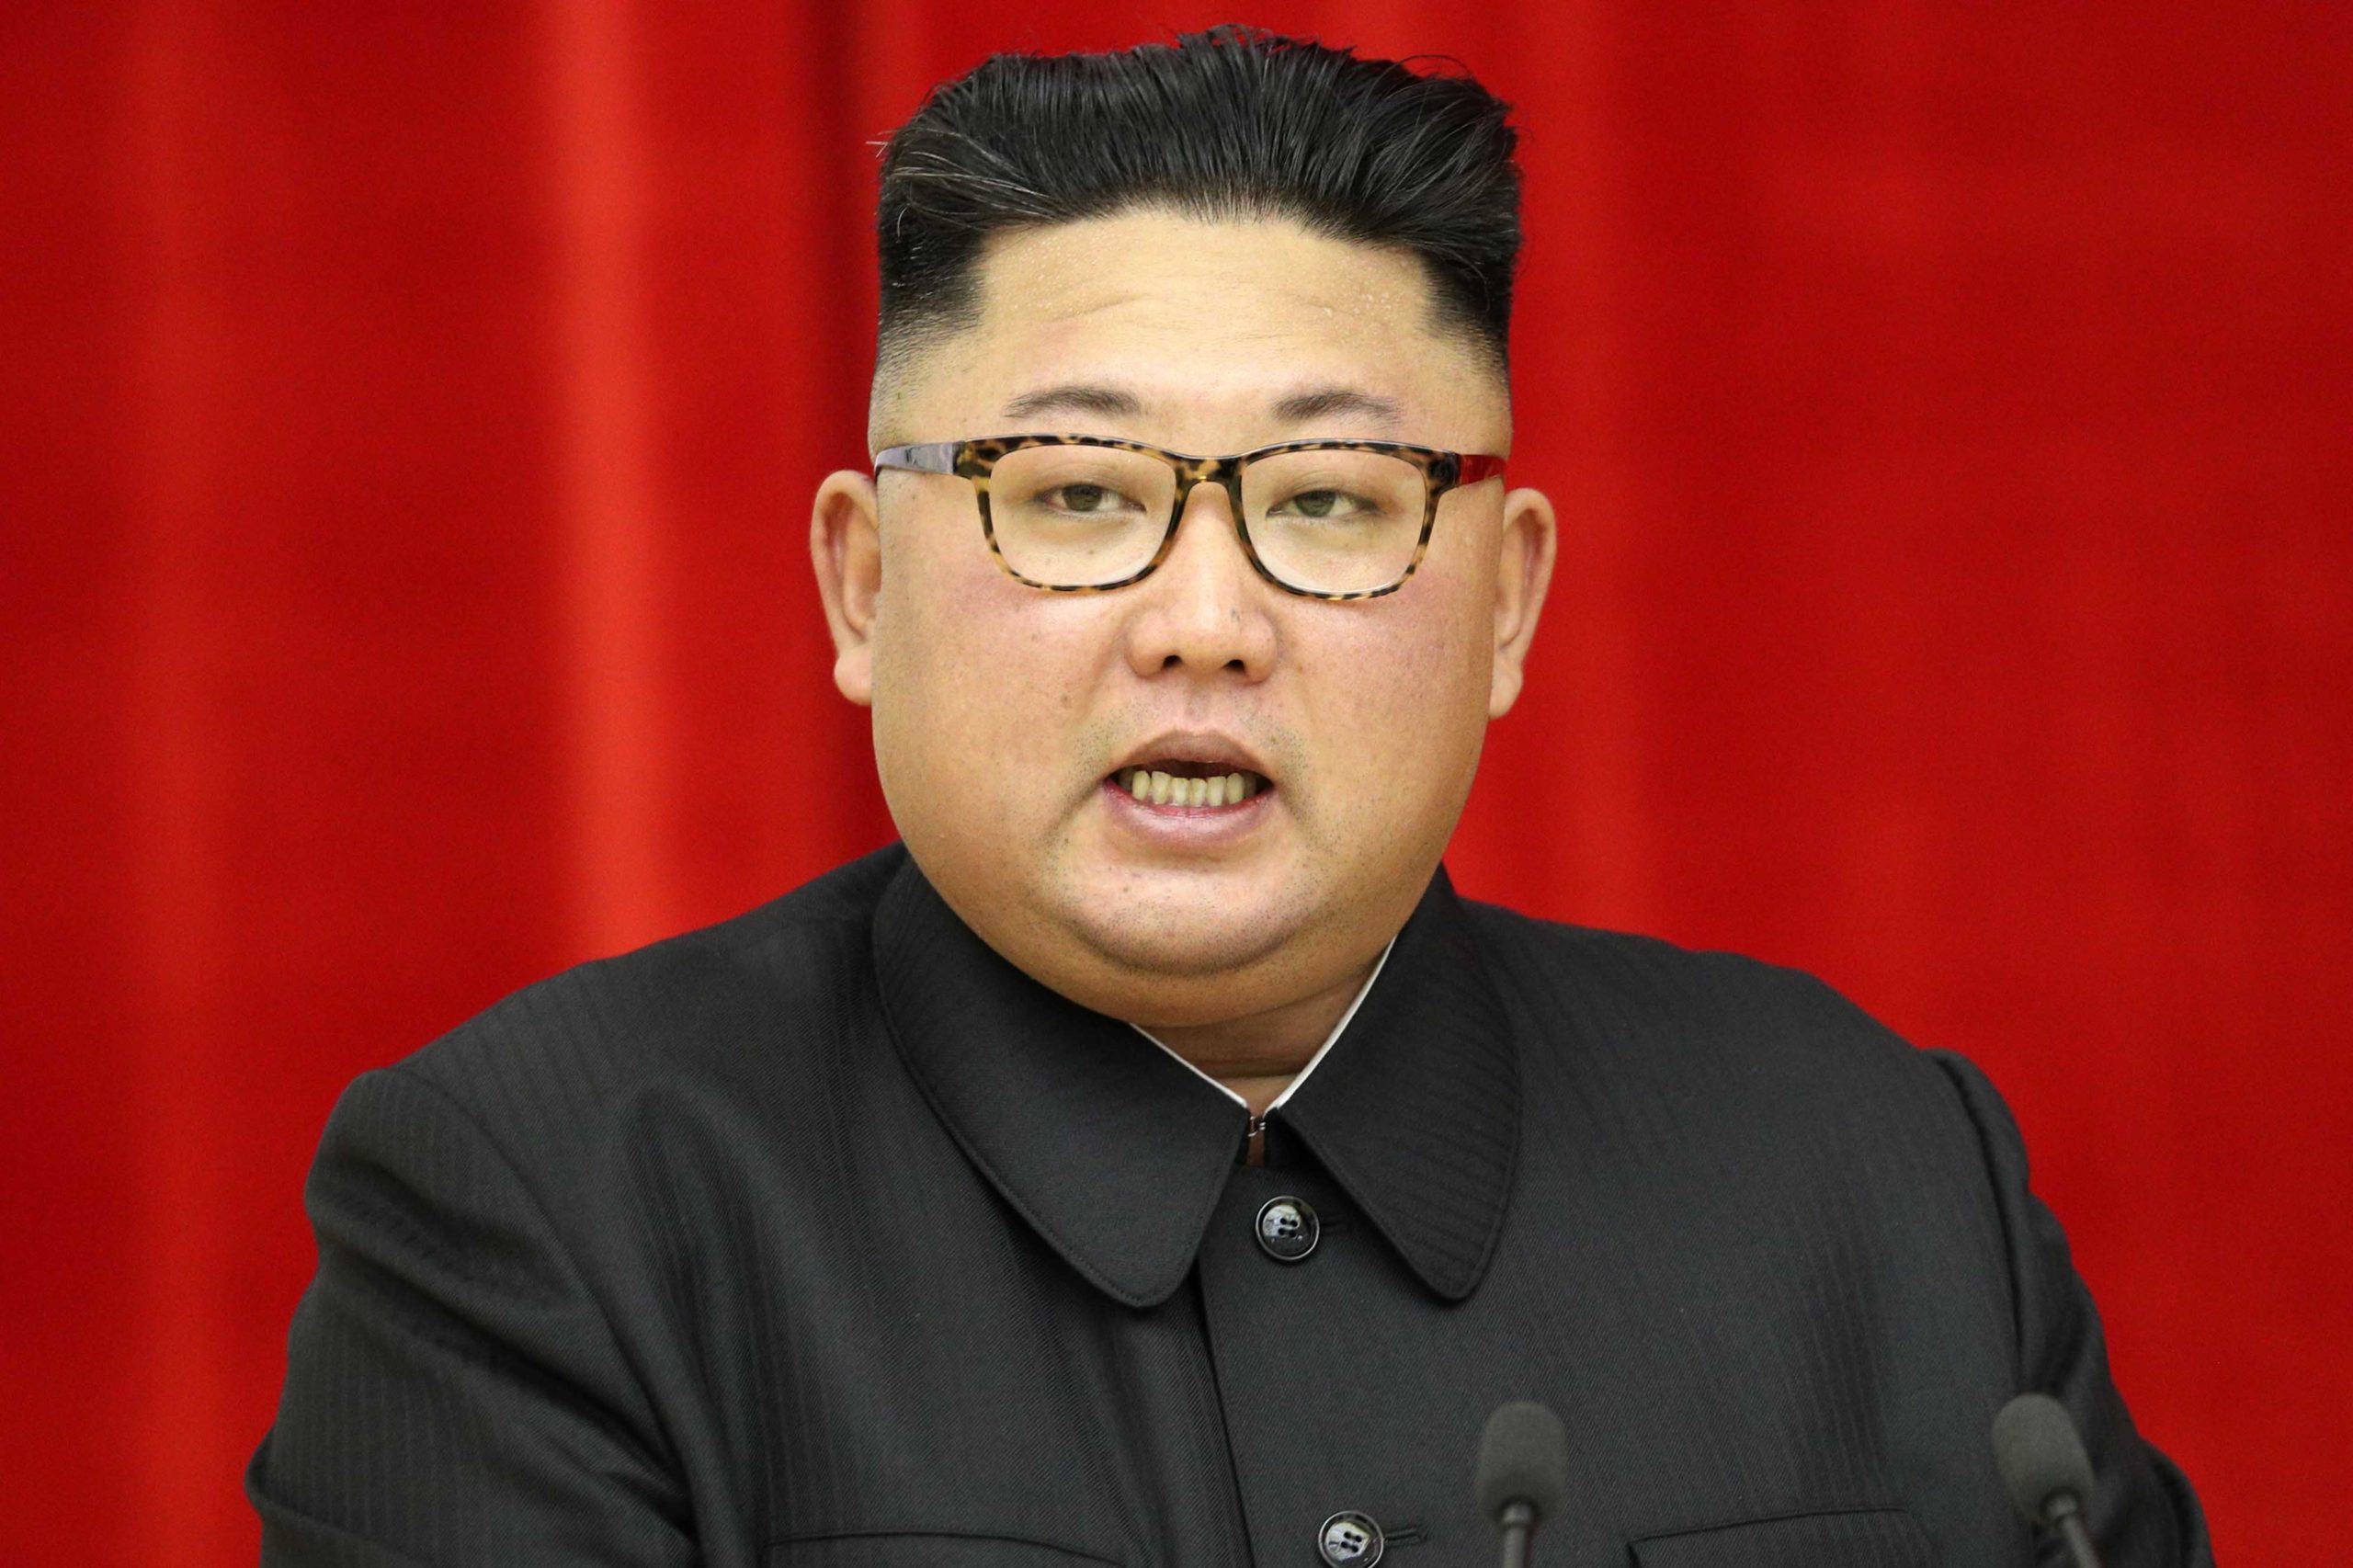 Seoul says no suspicious exercise in North Korea amid Kim issues